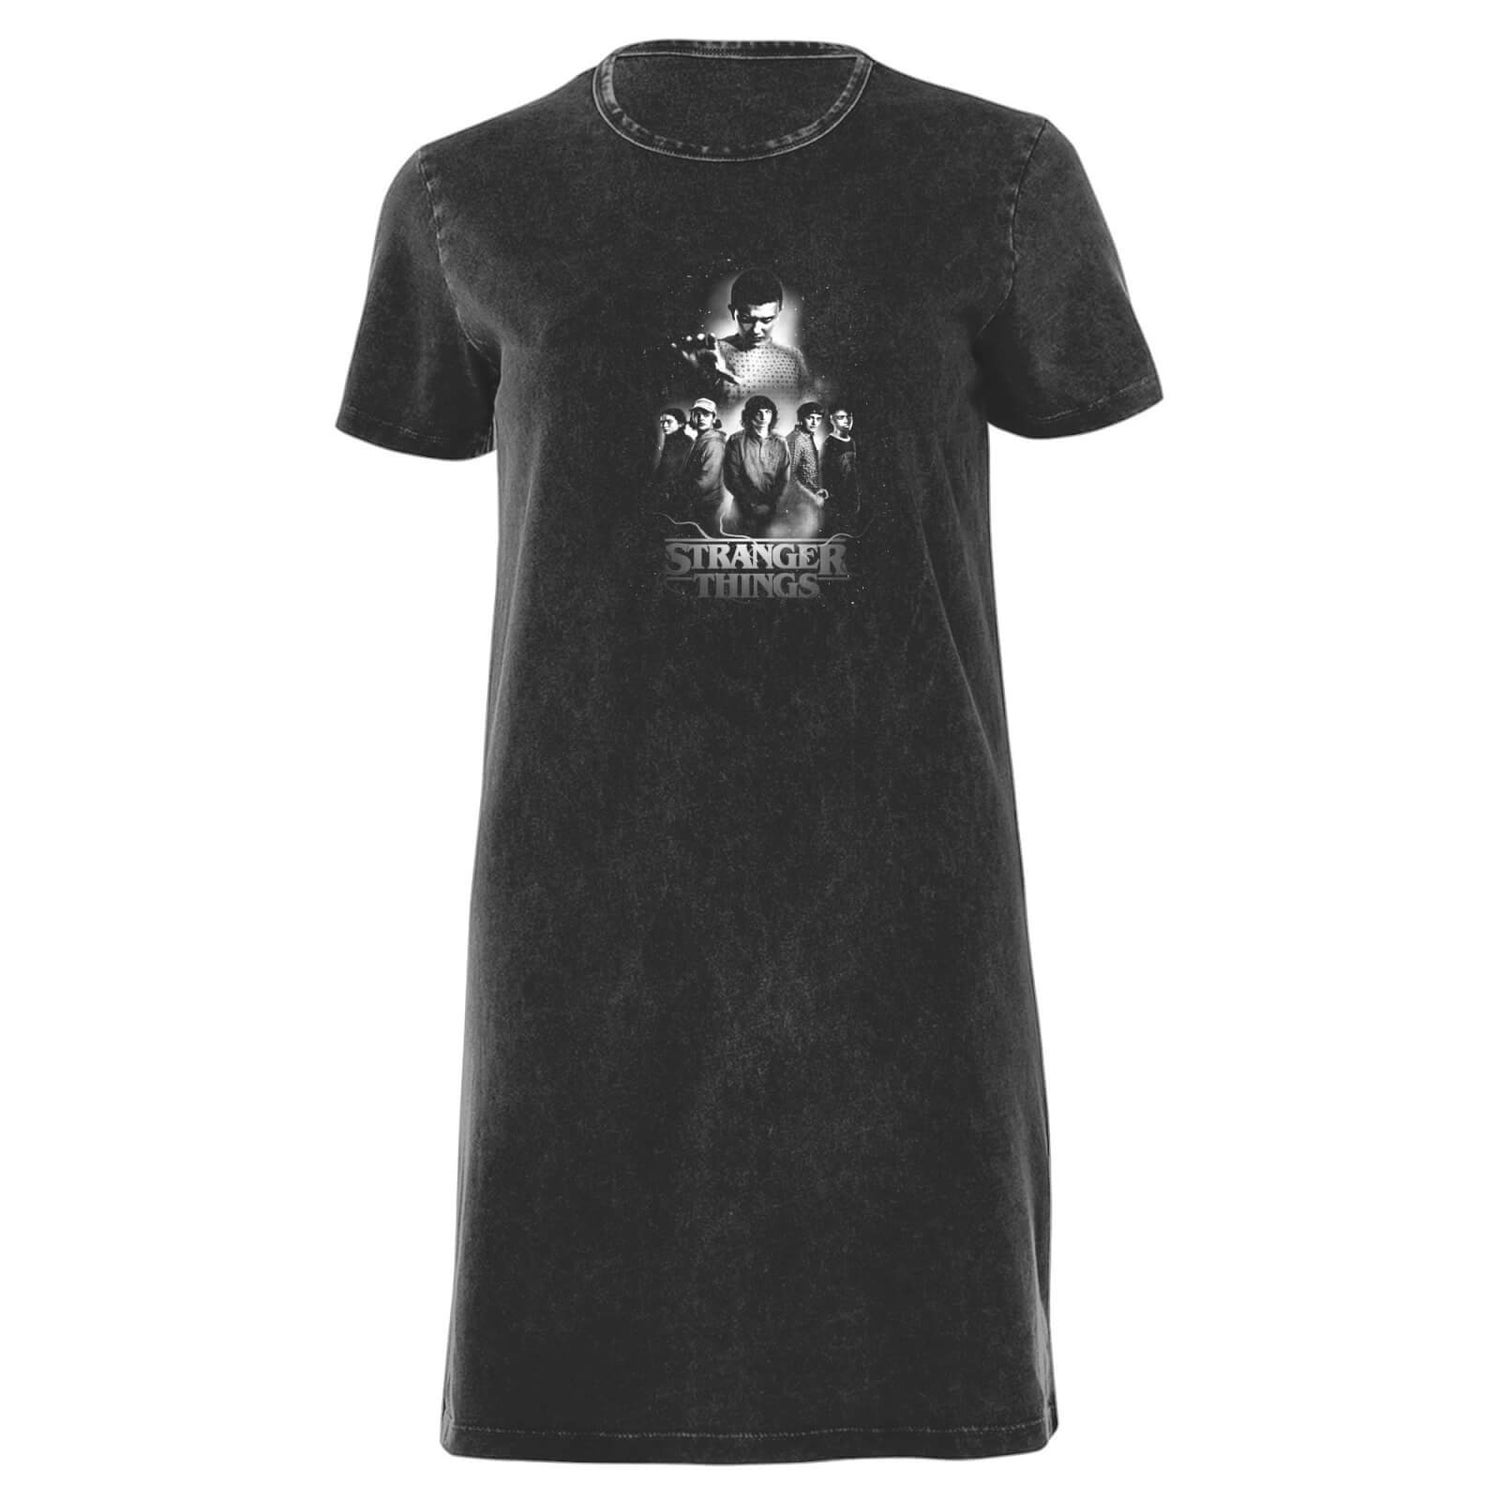 Robe T-Shirt Femme Stranger Things B&W - Noir Délavé